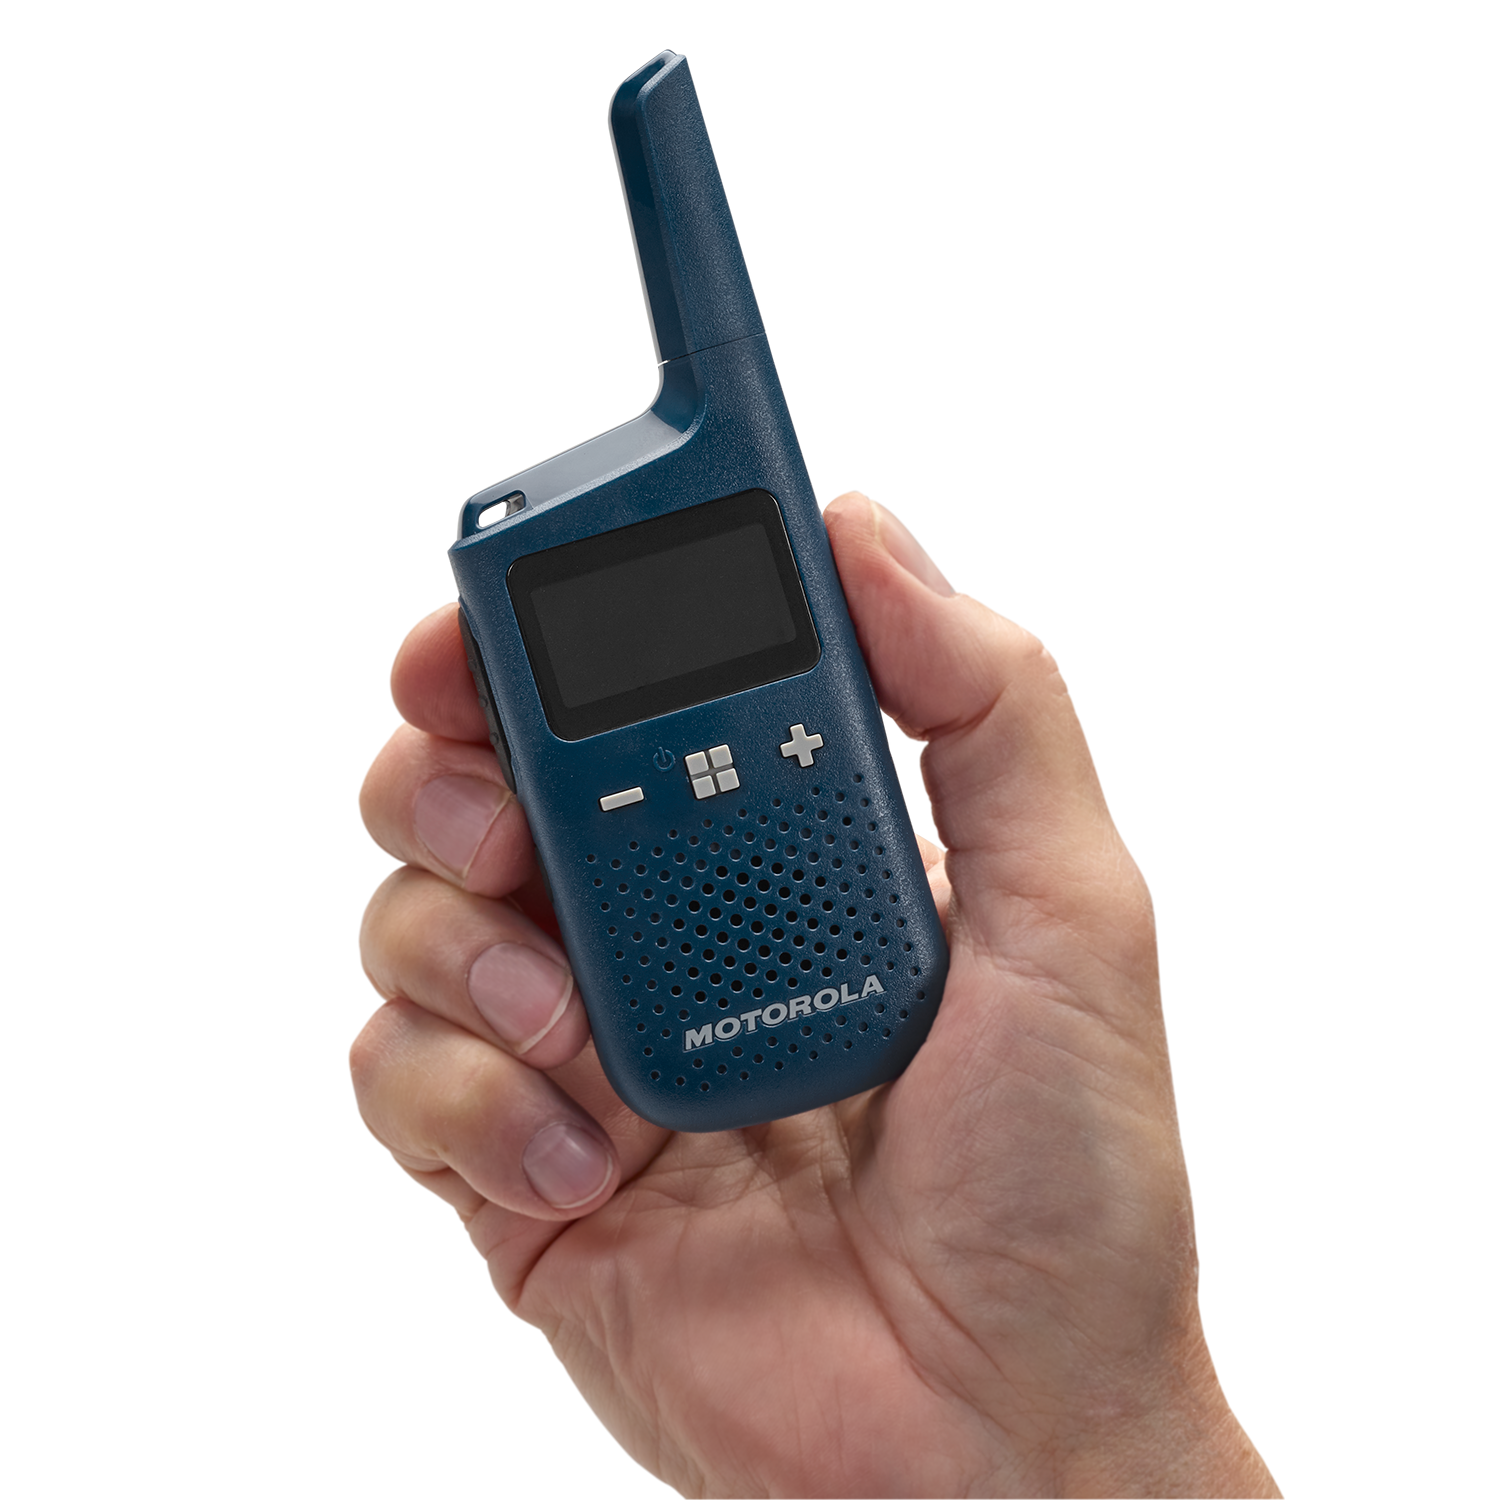 t383 (blue) walkie talkie handheld, fits in palm